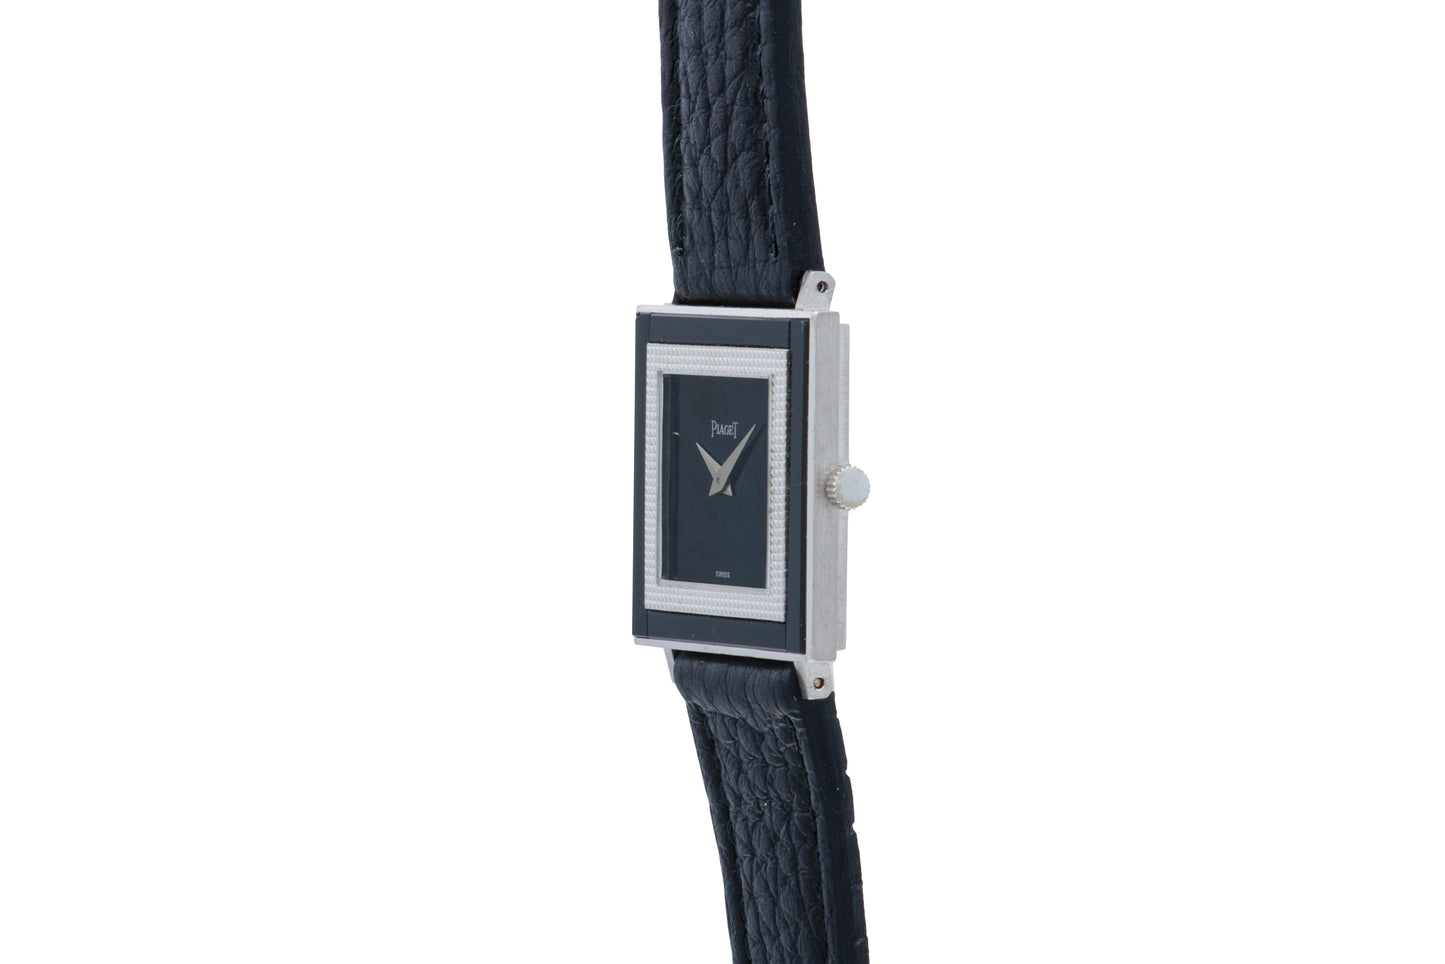 Piaget 'Onyx' Hobnail Dress Watch